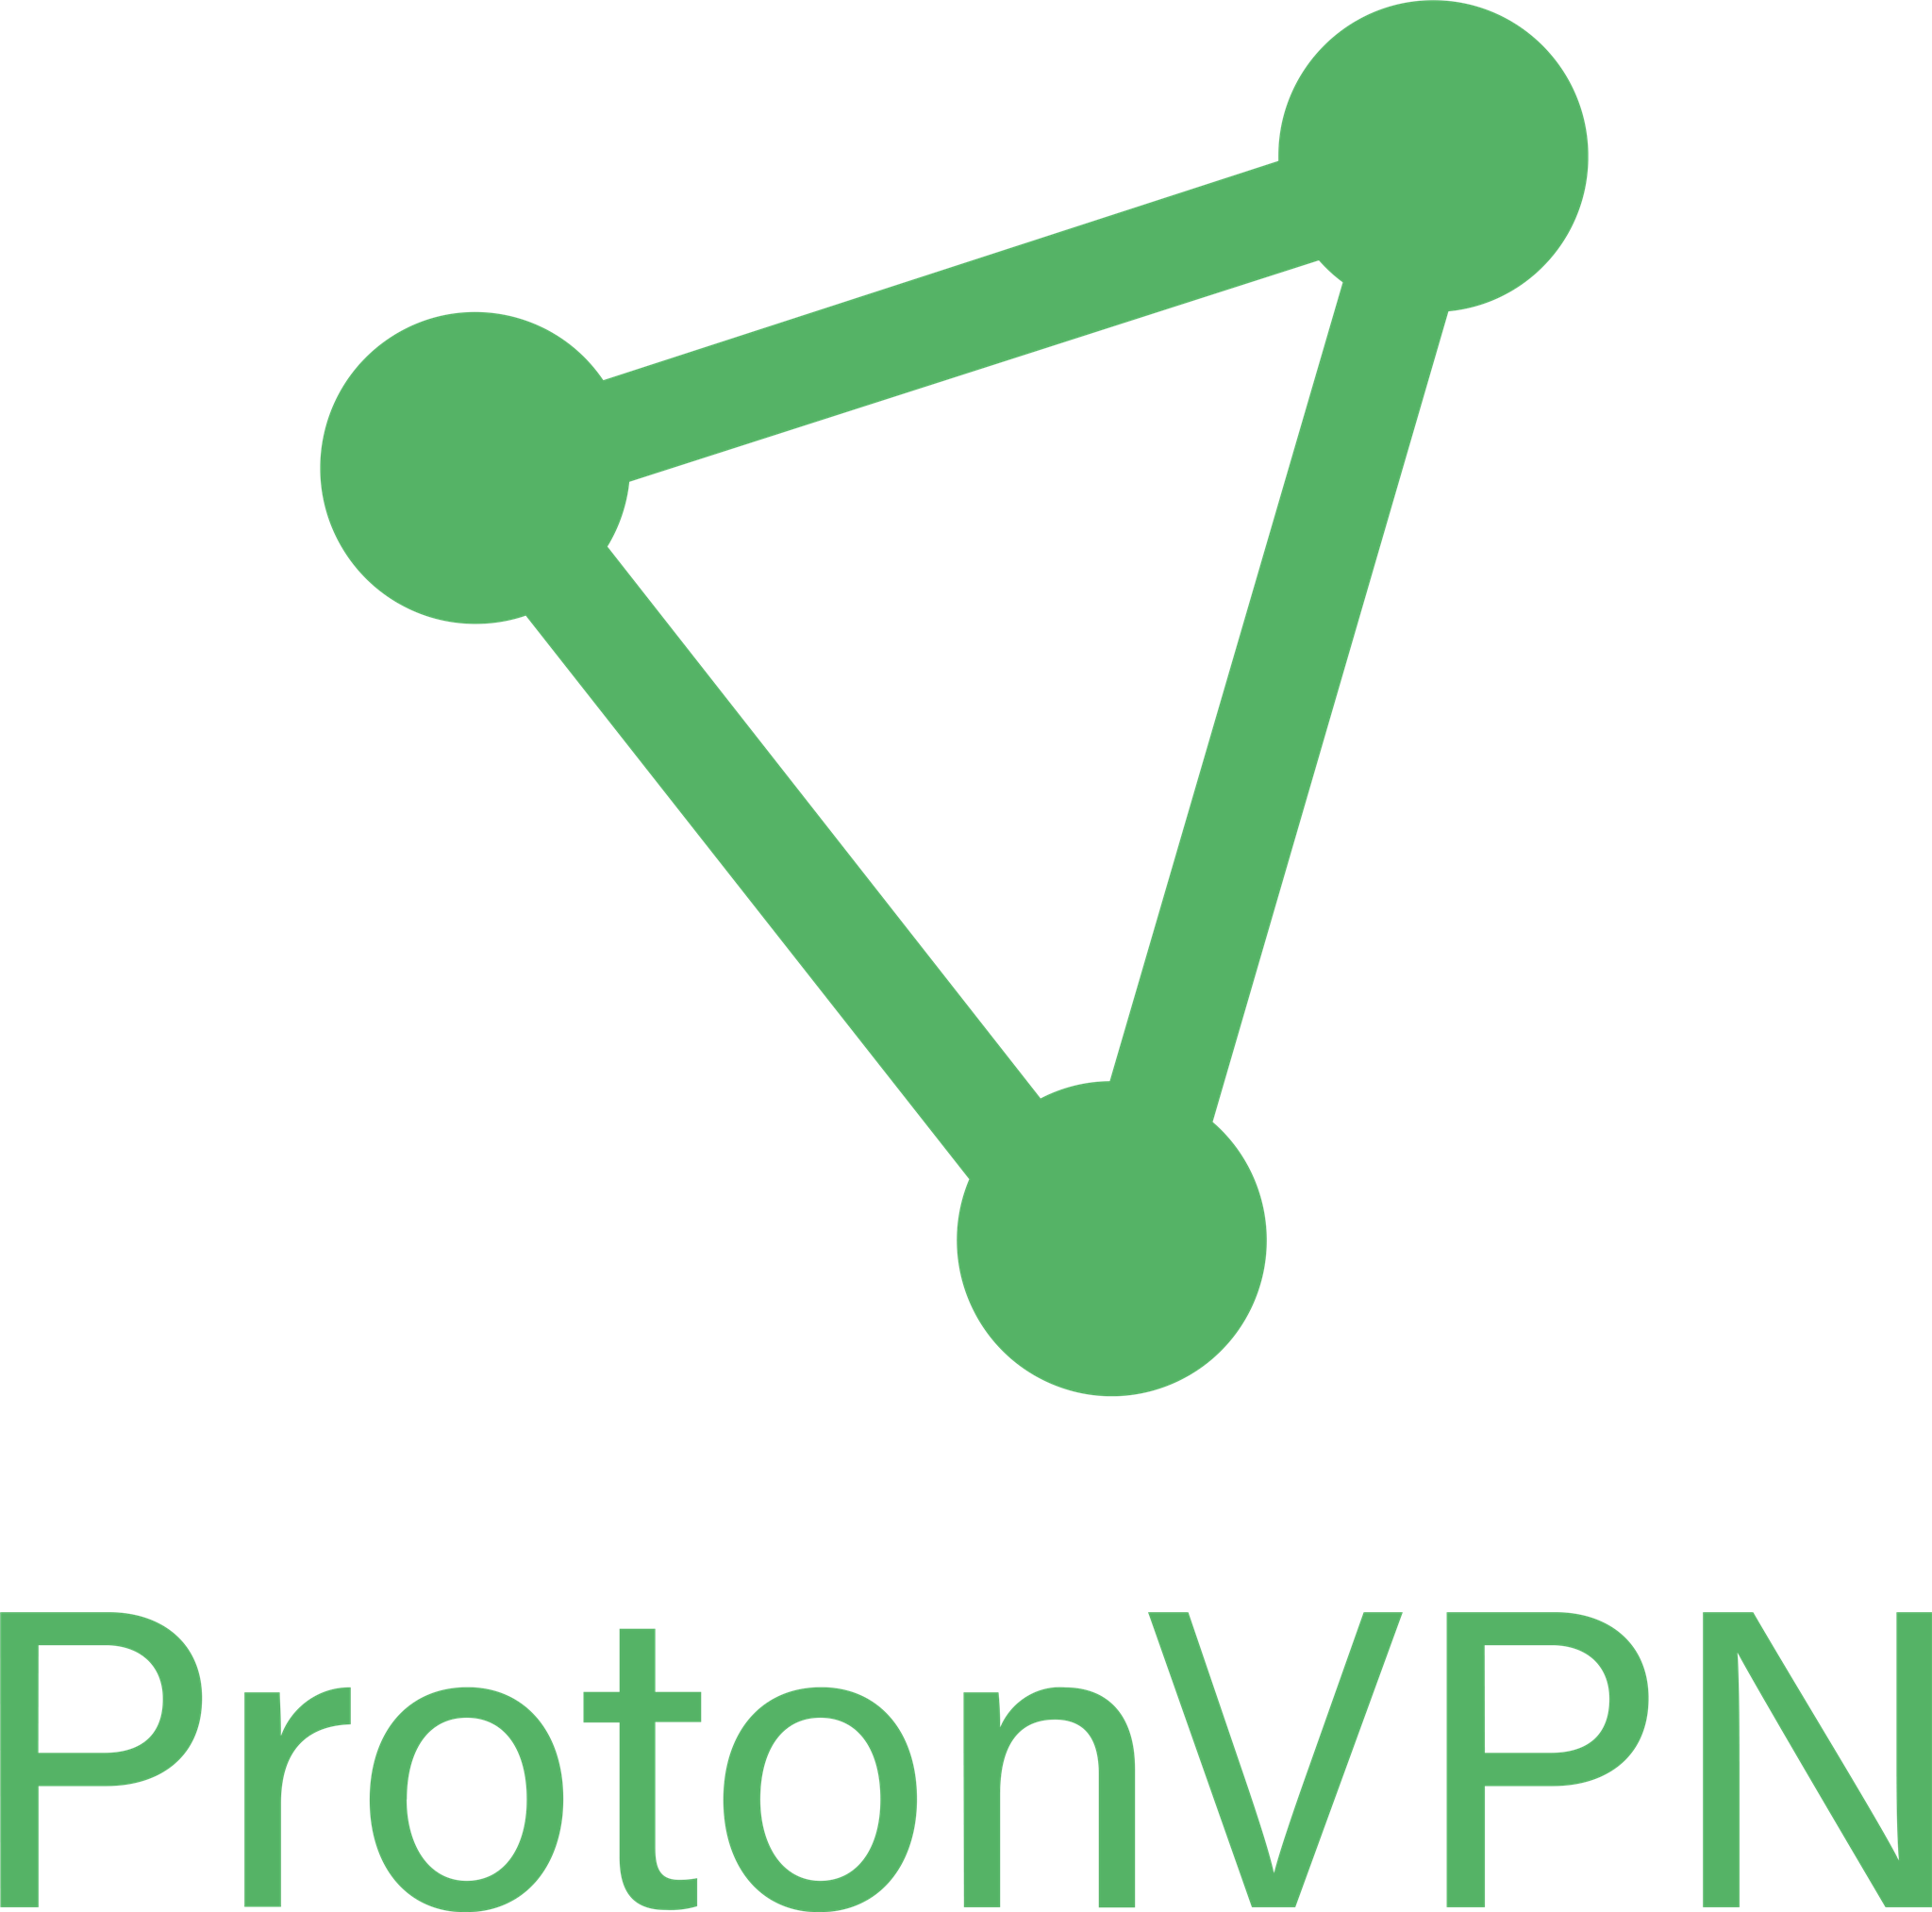 proton vpn firestick